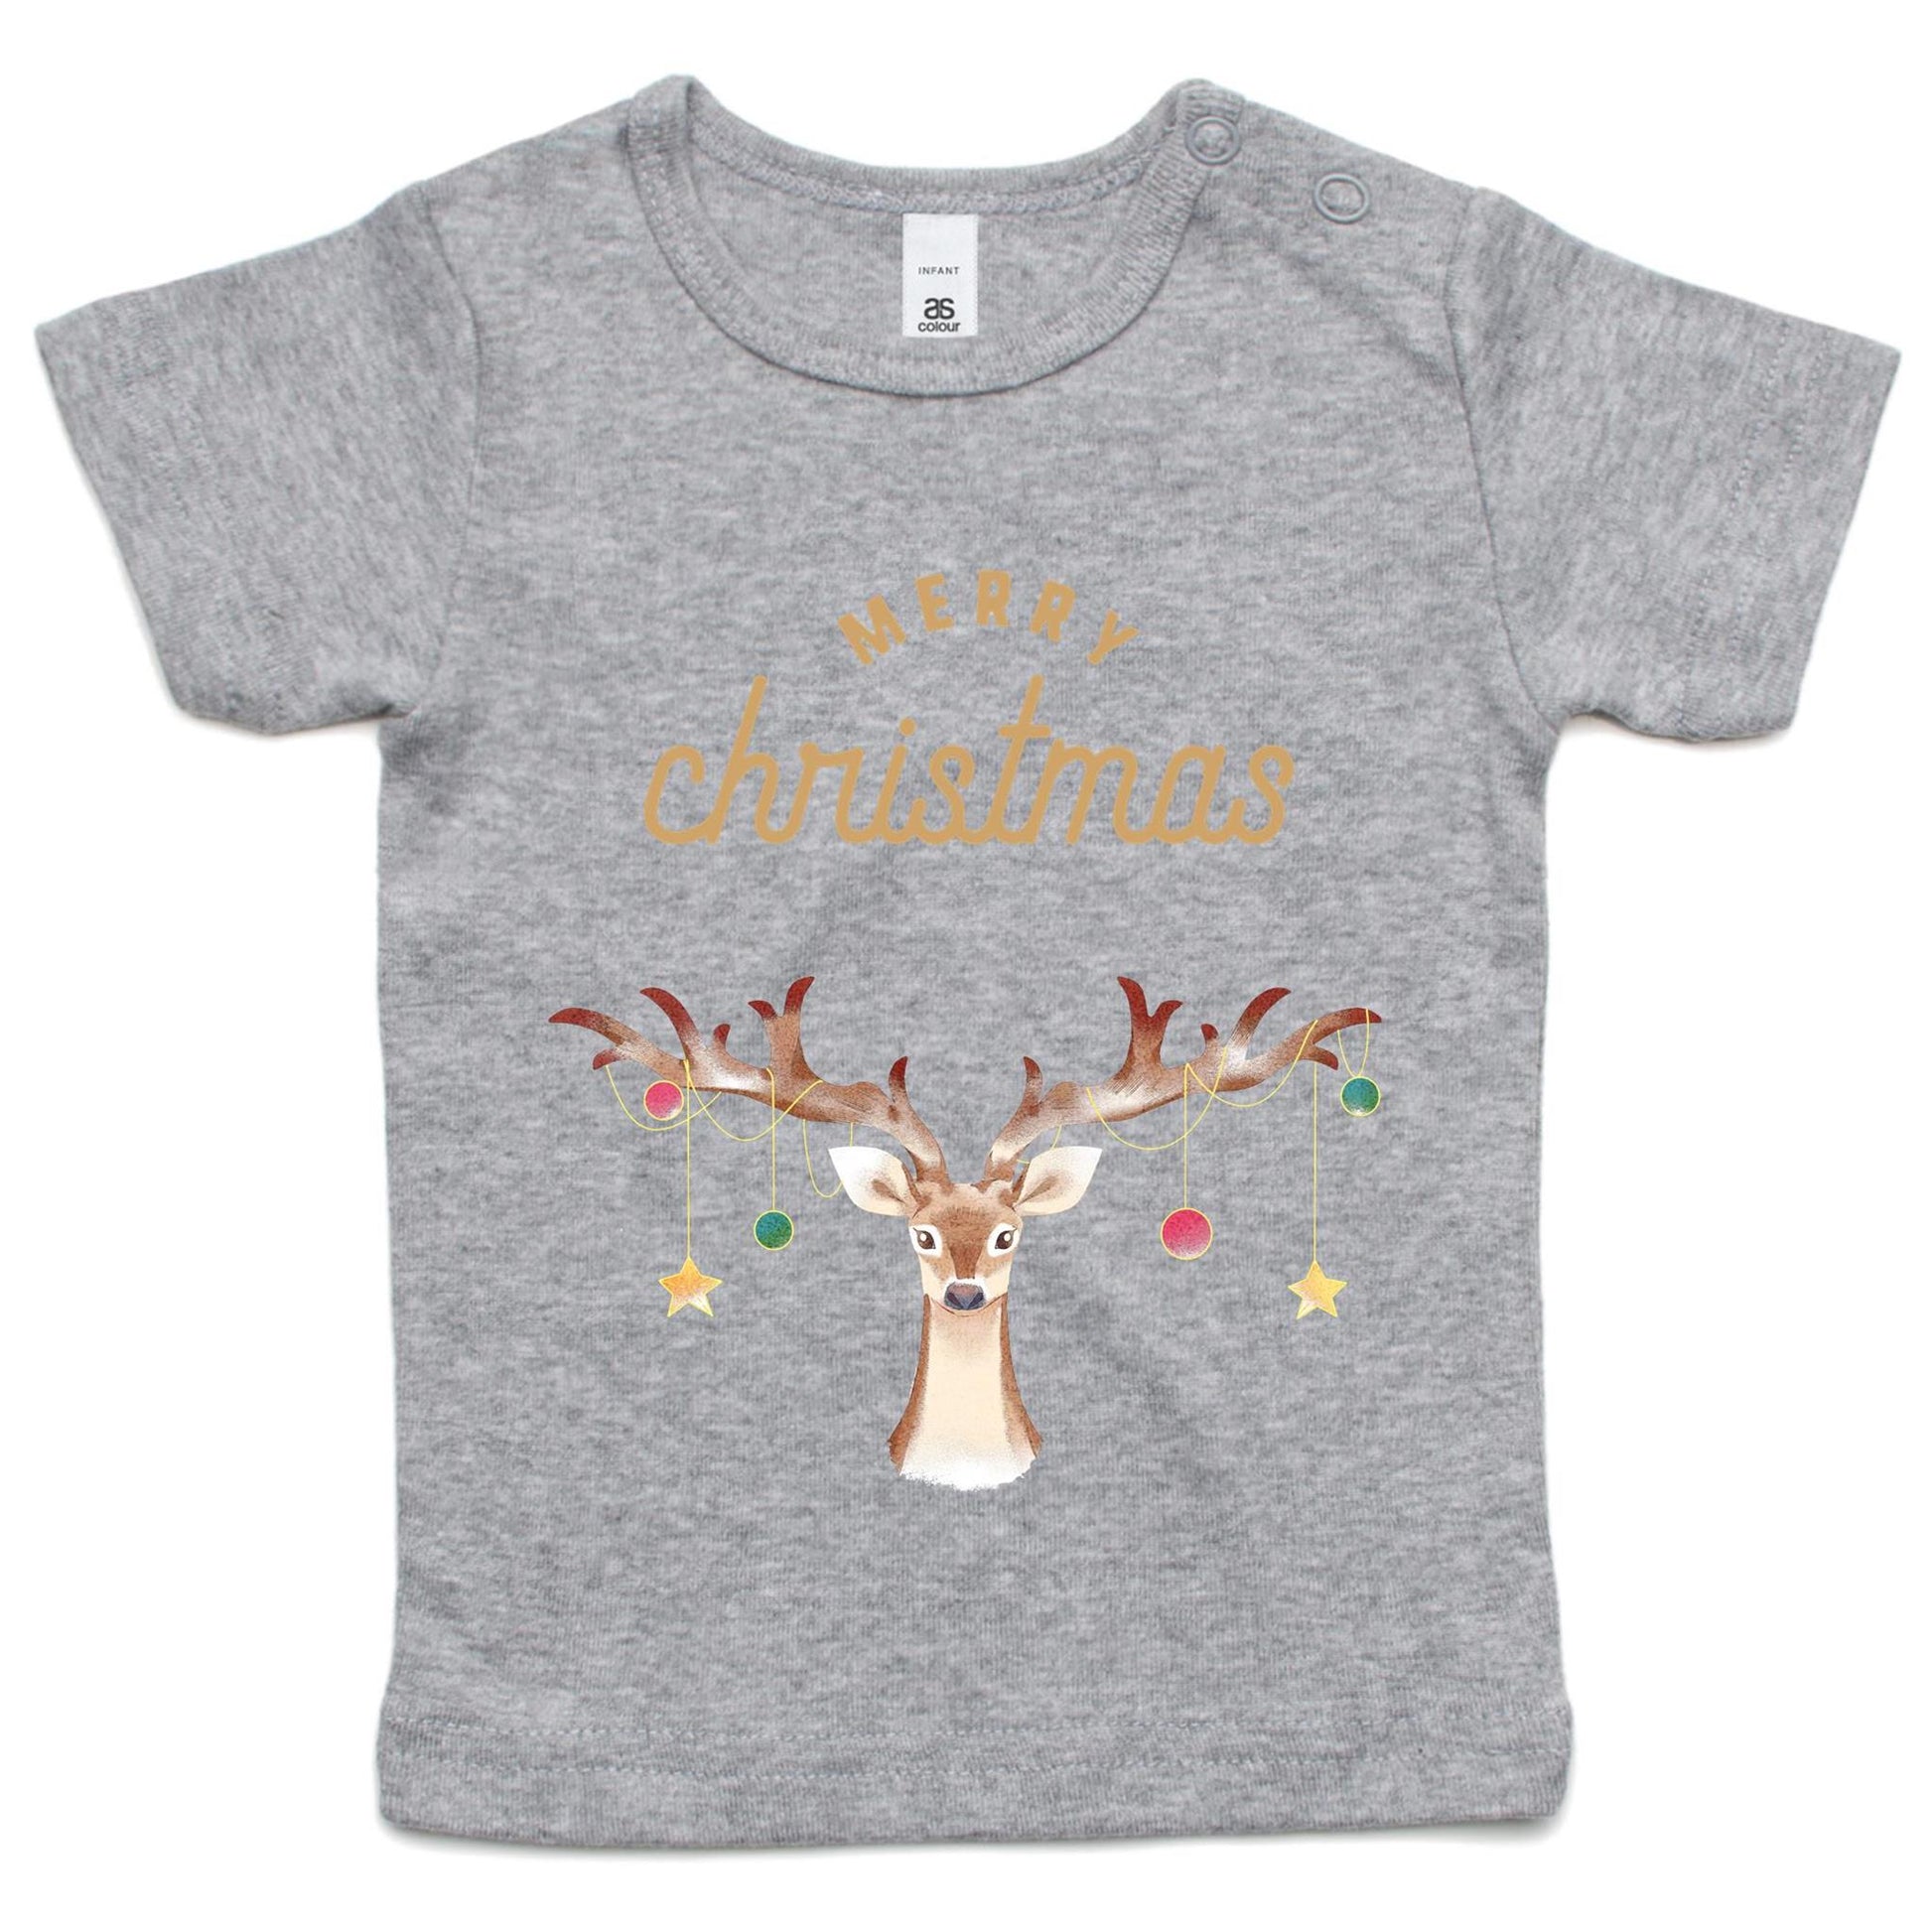 Merry Christmas Reindeer - Baby T-shirt Grey Marle Christmas Baby T-shirt Merry Christmas